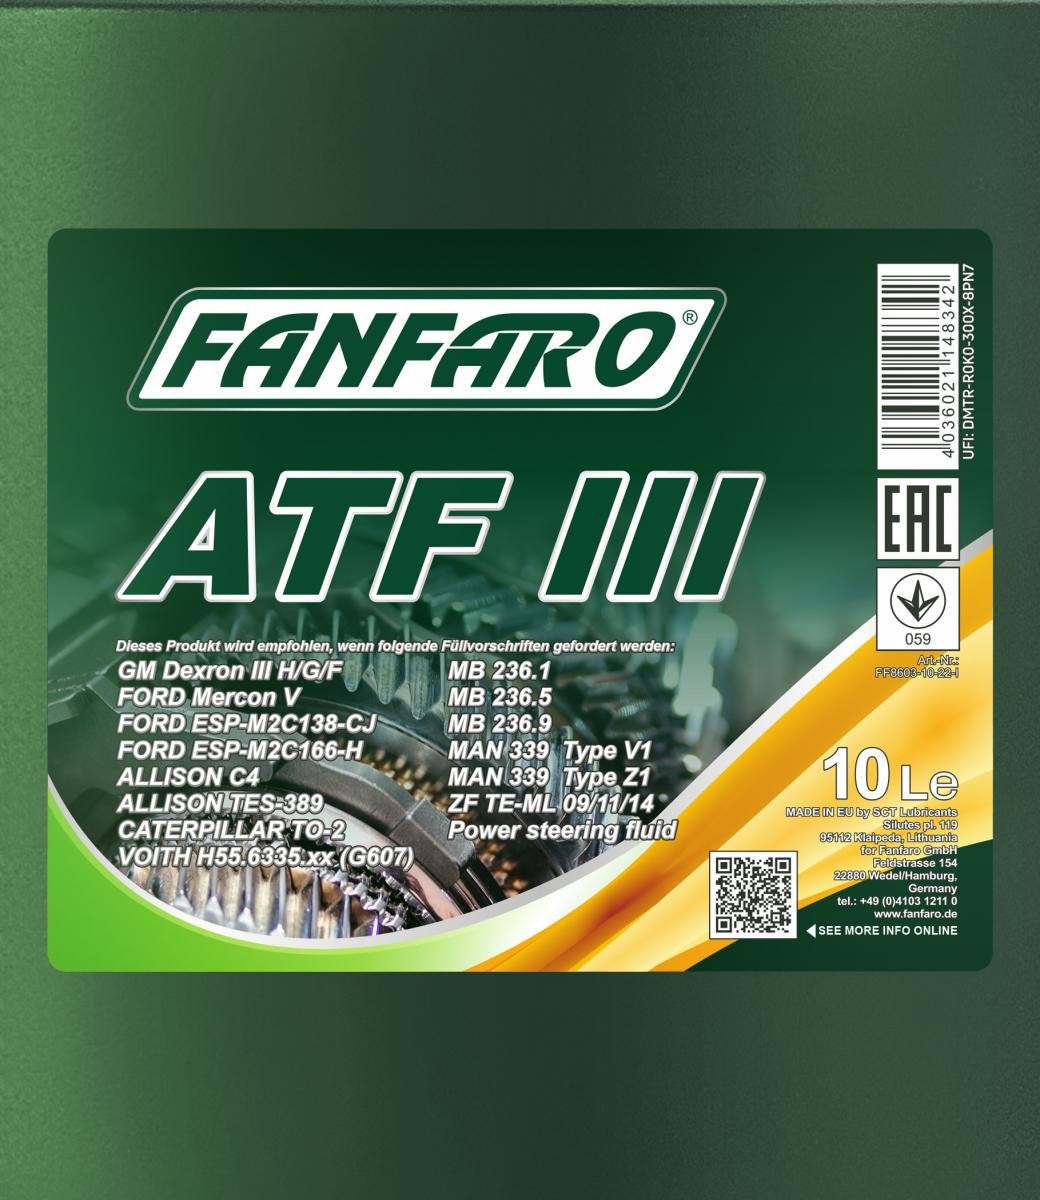 1 Liter FANFARO Automatikgetriebeöl ATF Universal Full Synthetic